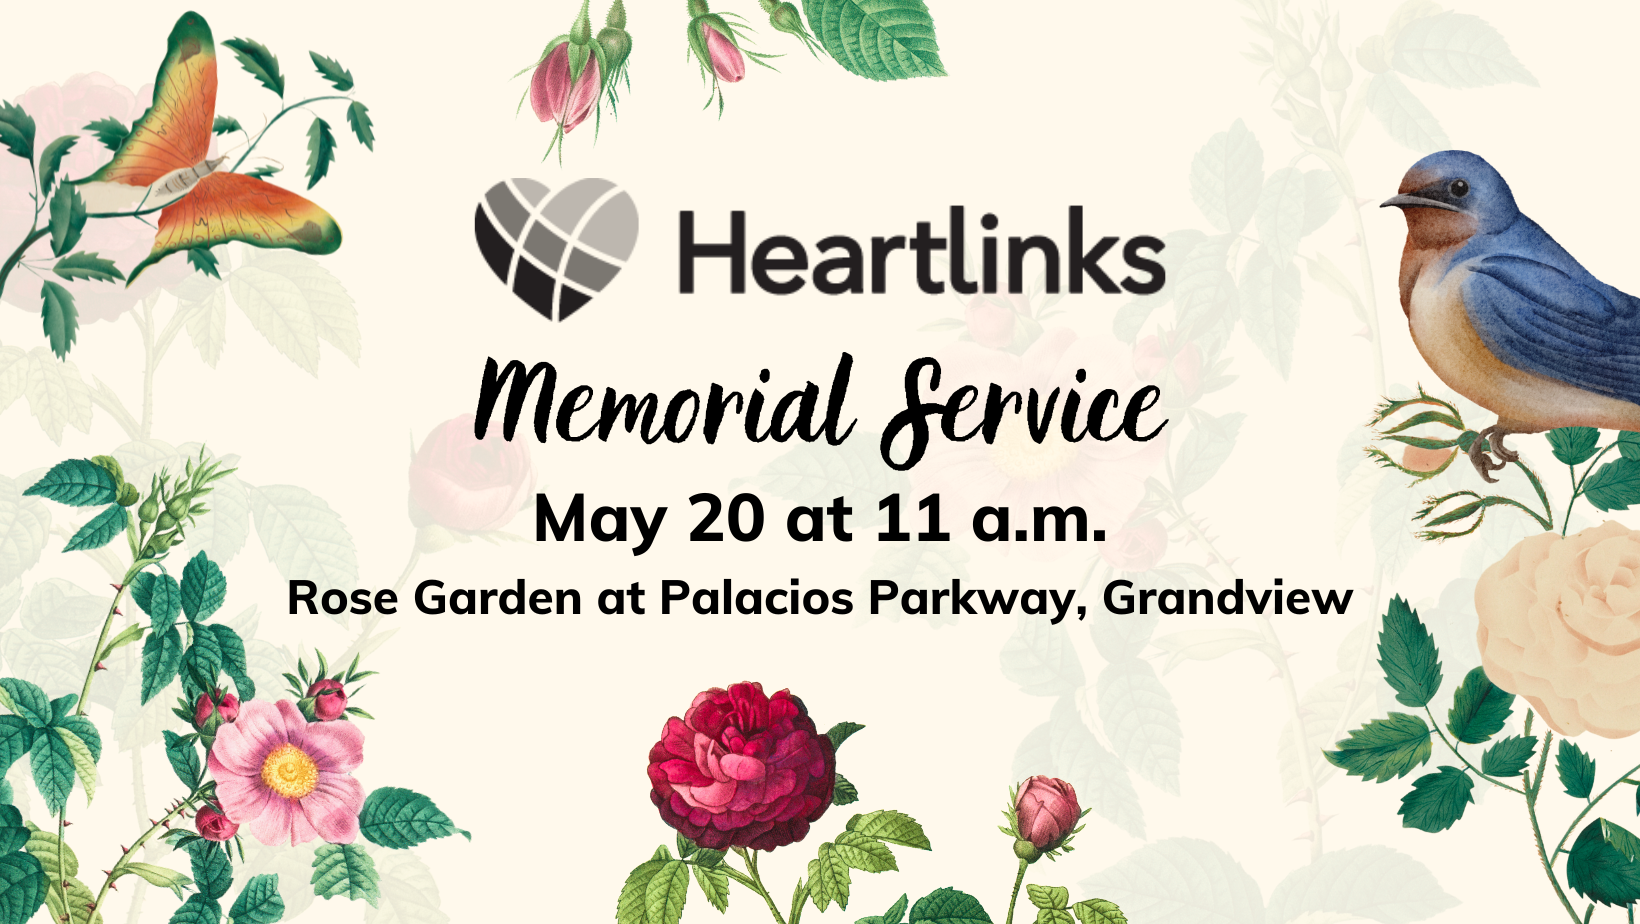 Heartlinks Memorial Service Banner Image Reads: Heartlinks Memorial Service May 20 at 11 a.m. Rose Garden at Palacios Parkway, Grandview.